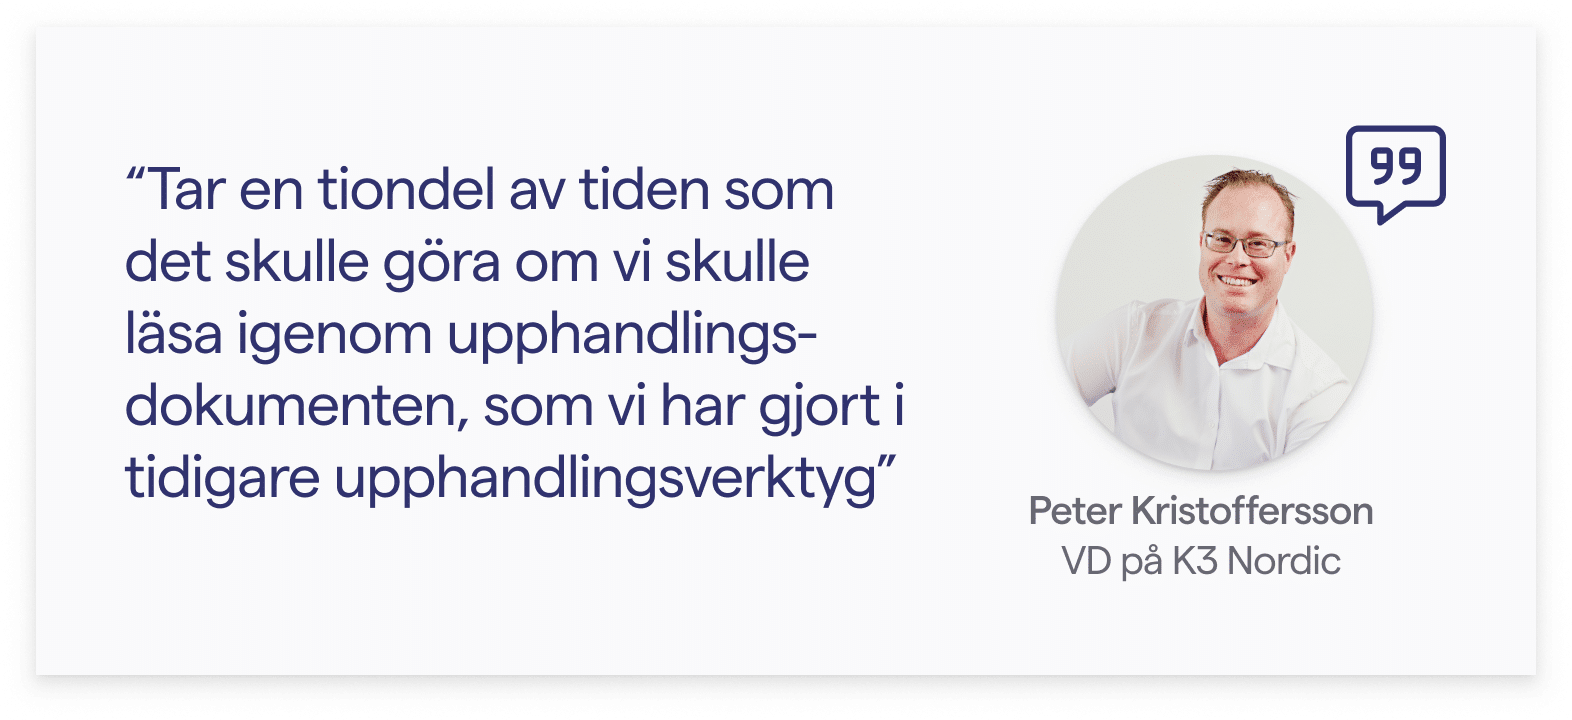 Citat av Peter Kristoffersson, VD på K3 Nordic